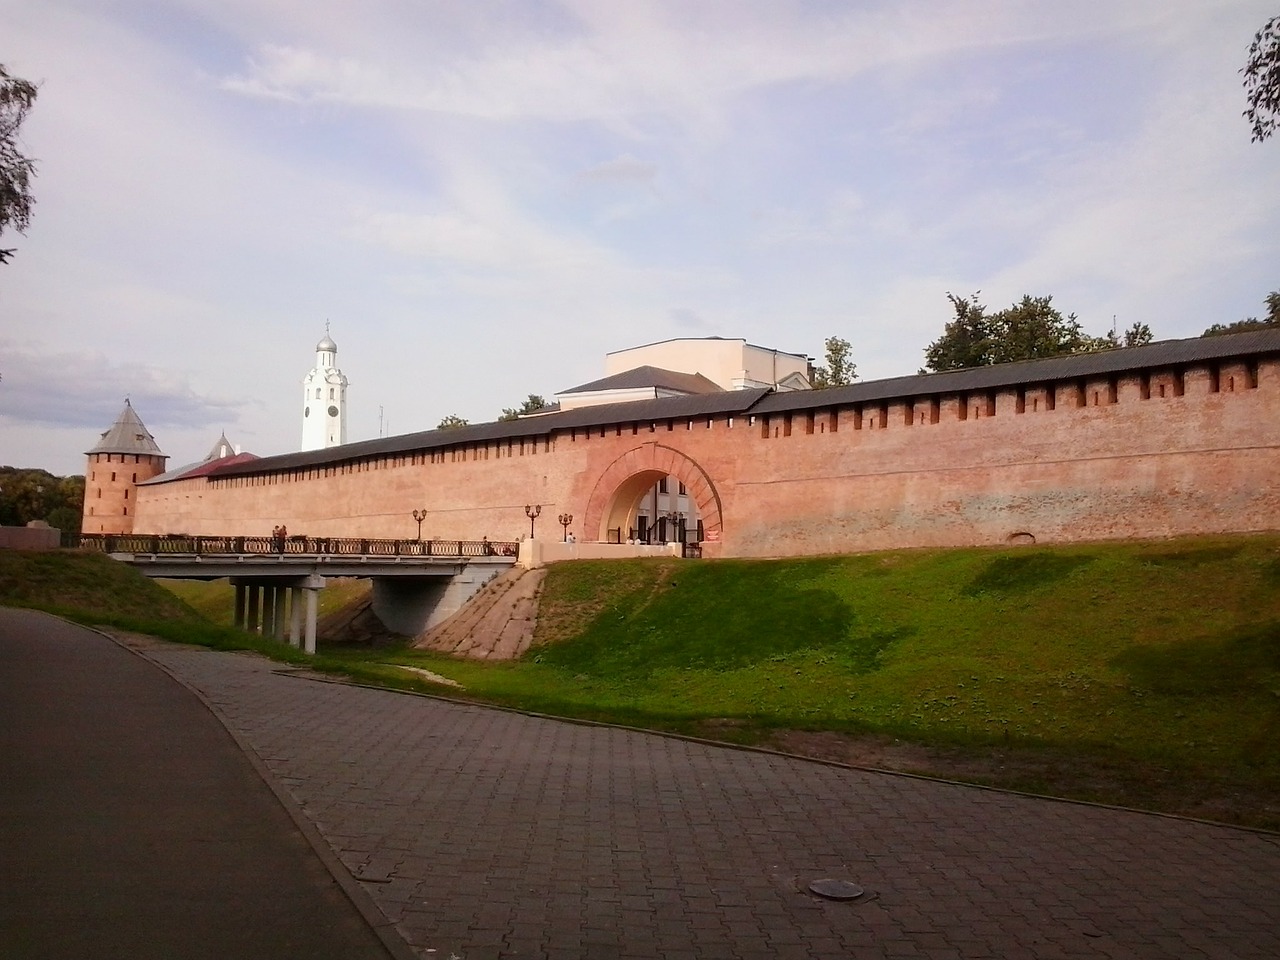 Veliky Novgorod Architecture Wall Gate Castle Free Image From Needpix Com